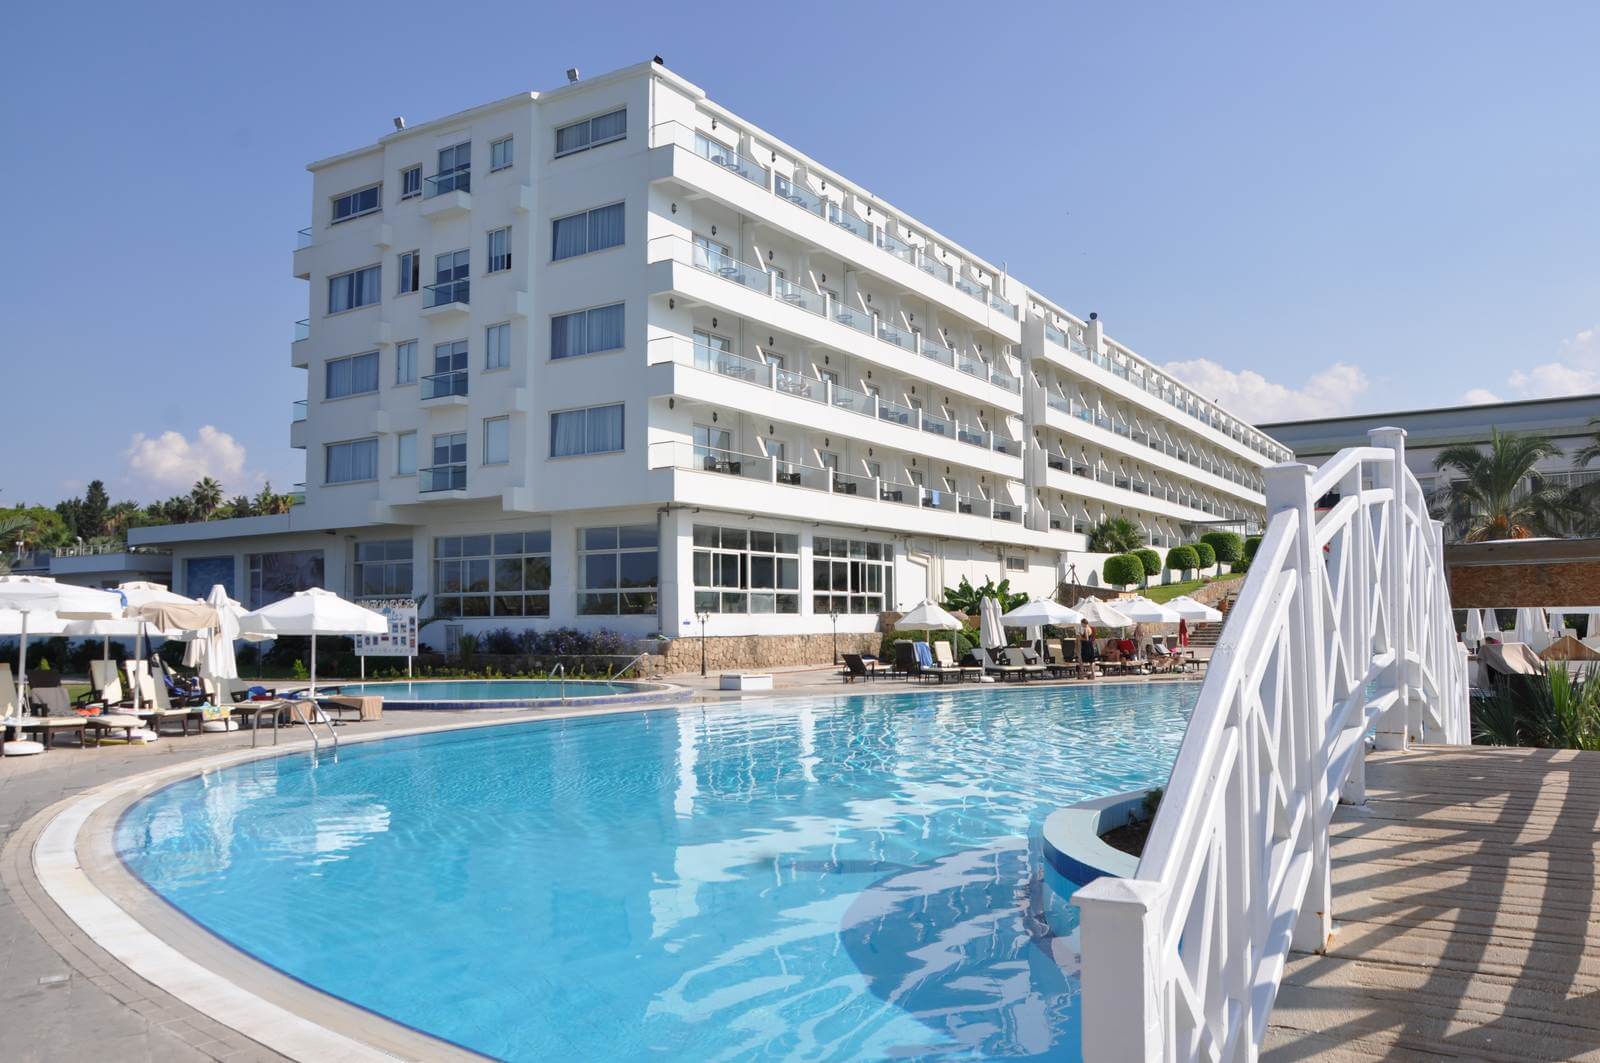 Foto: Hotel Acapulco Hotelgebude und Pool - Lupe Reisen